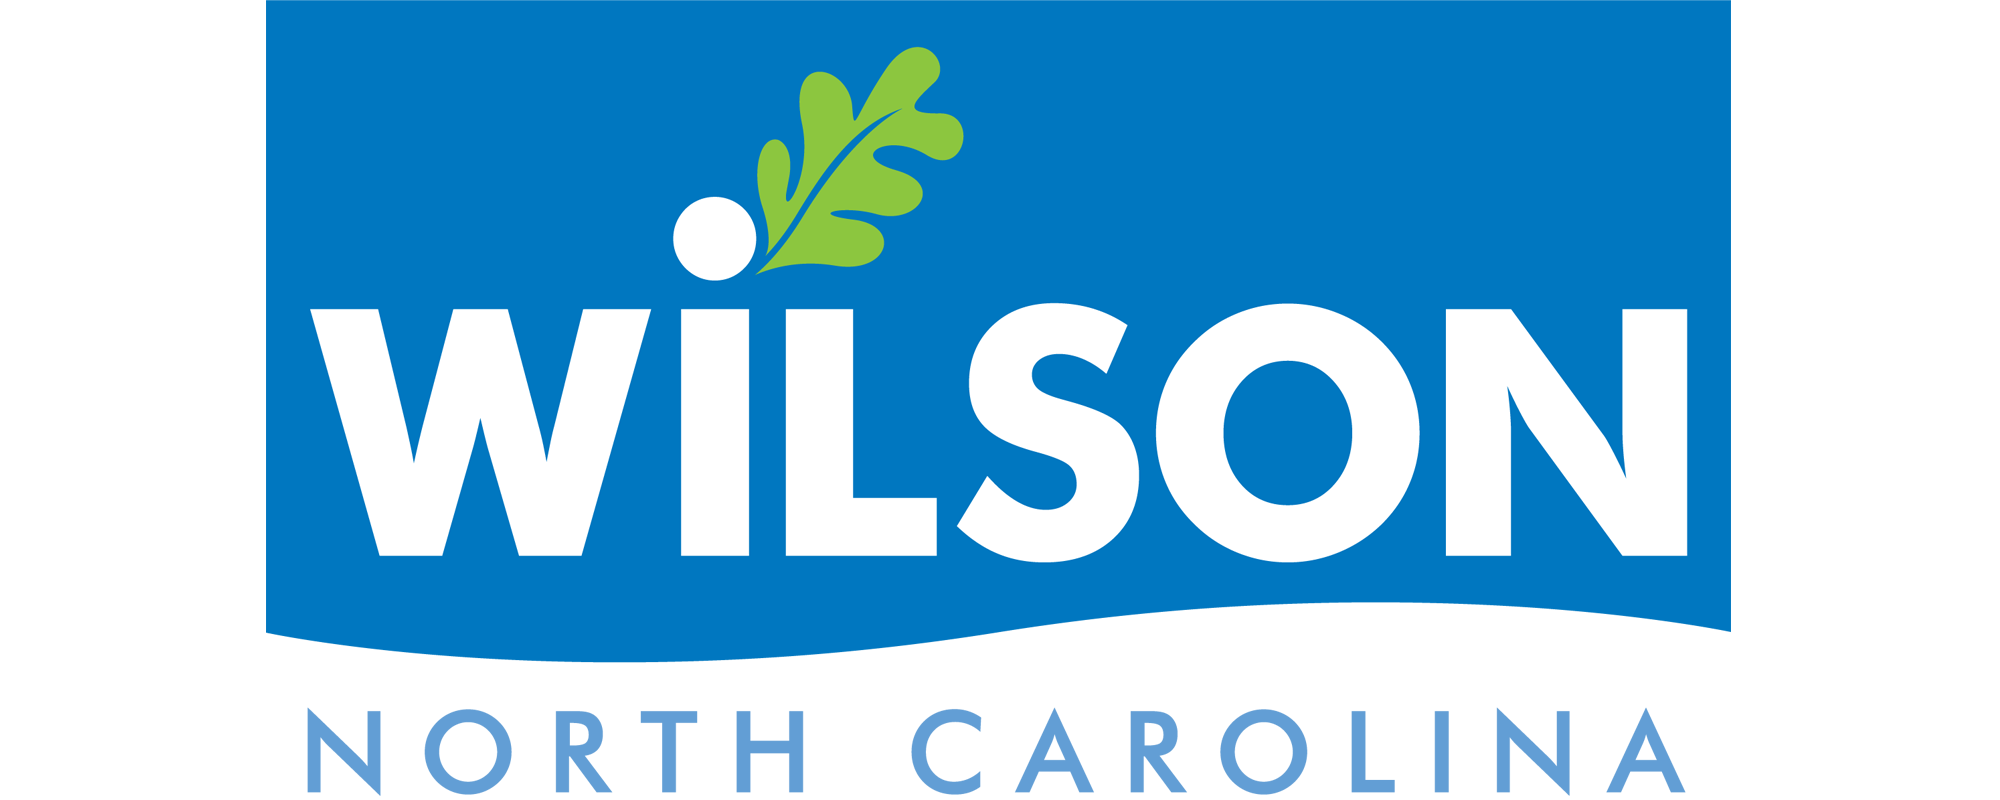 Gig EAST - City of Wilson Logo